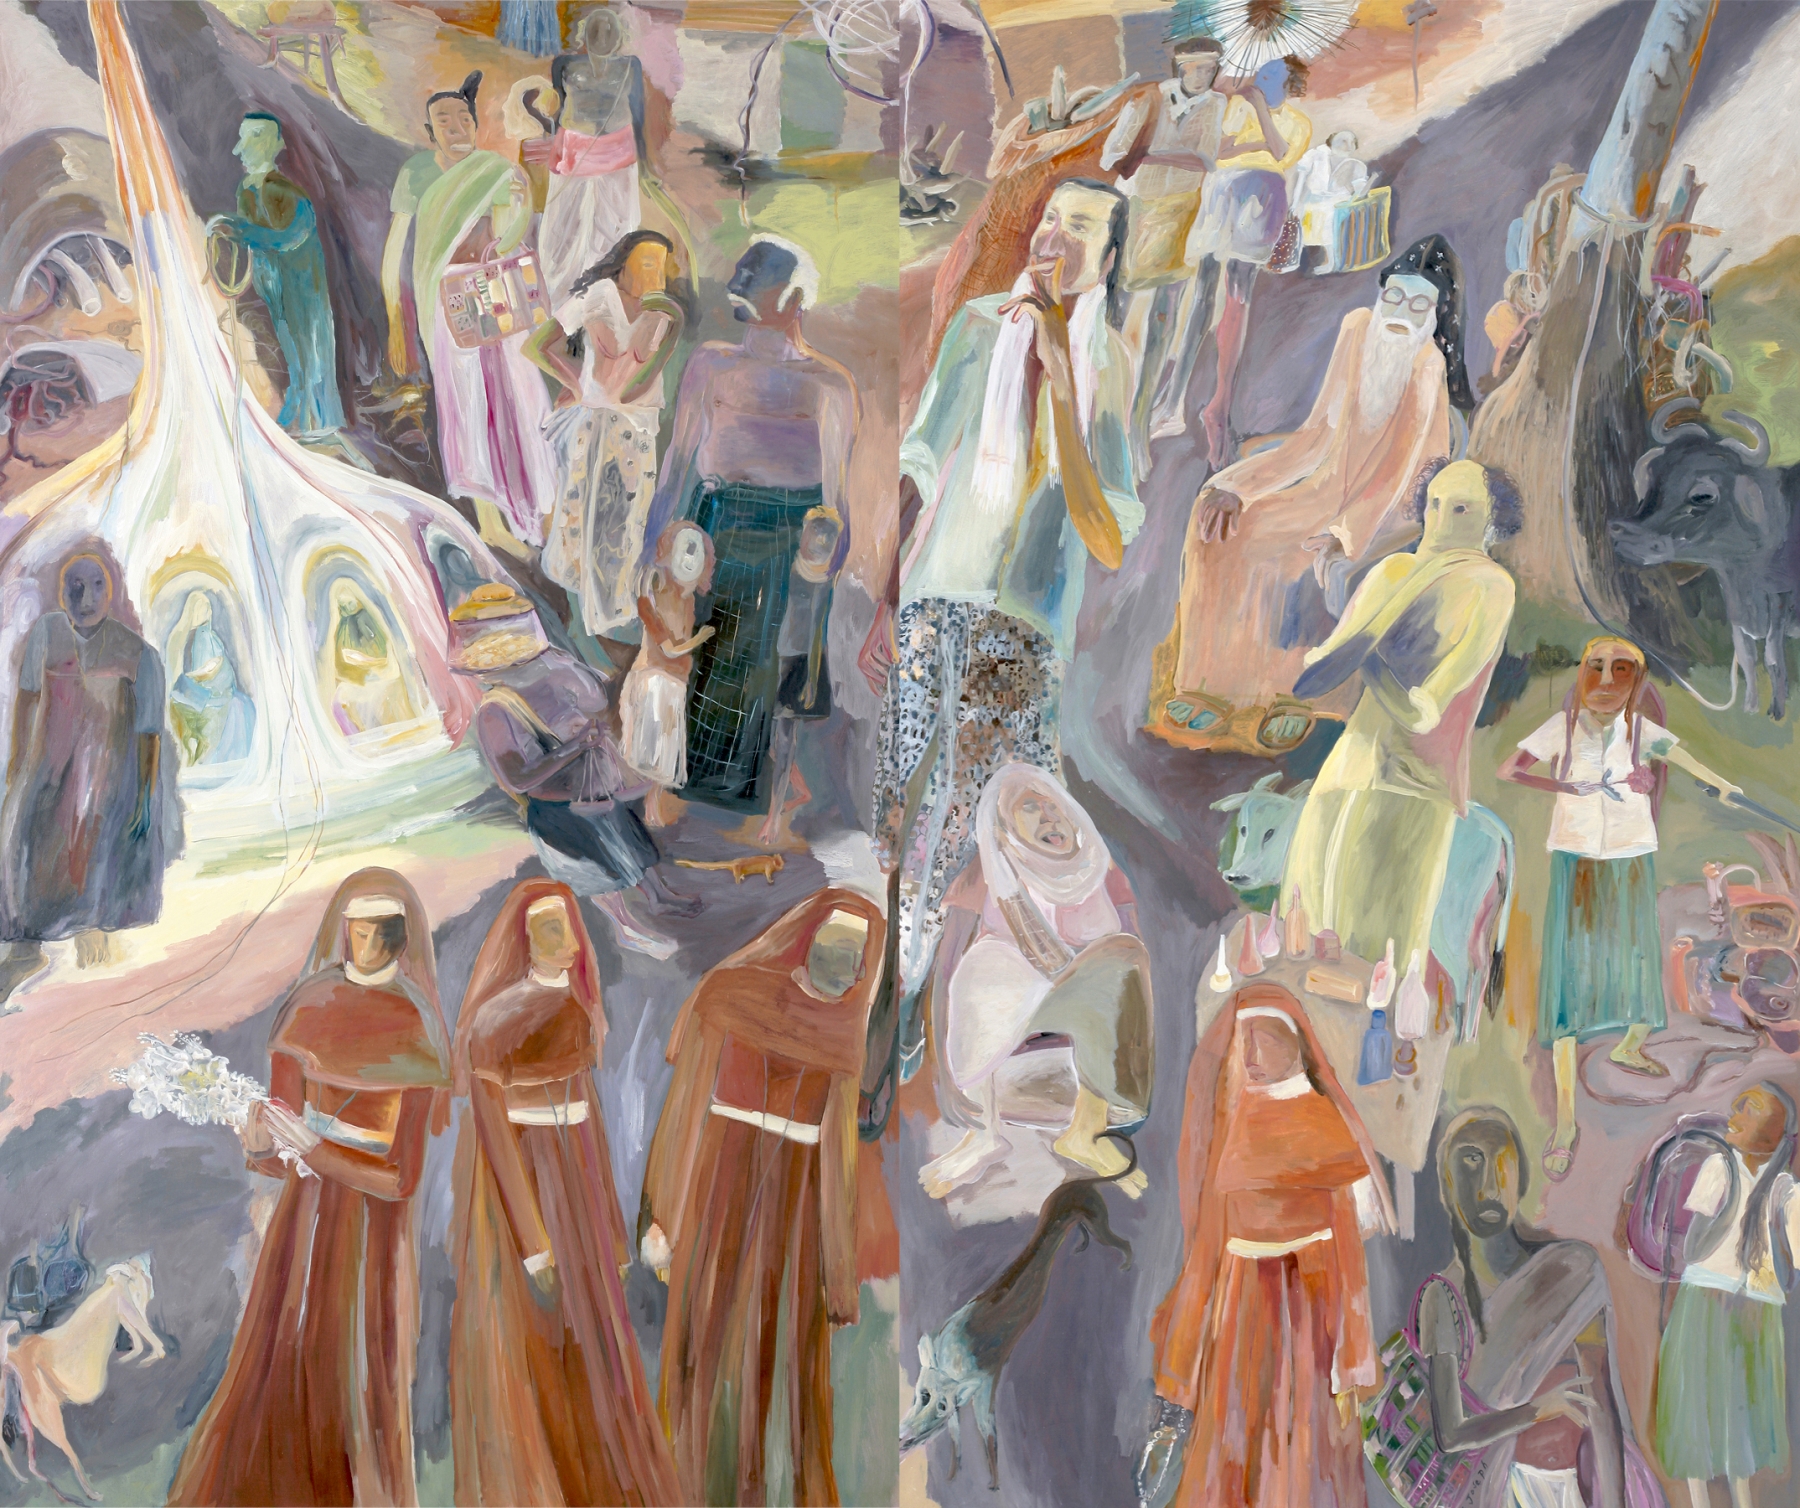 SOSA JOSEPH,&amp;nbsp;Other Colours,&amp;nbsp;2013, oil on canvas, 60 x 72 in / 152 x 182.8 cm (diptych)